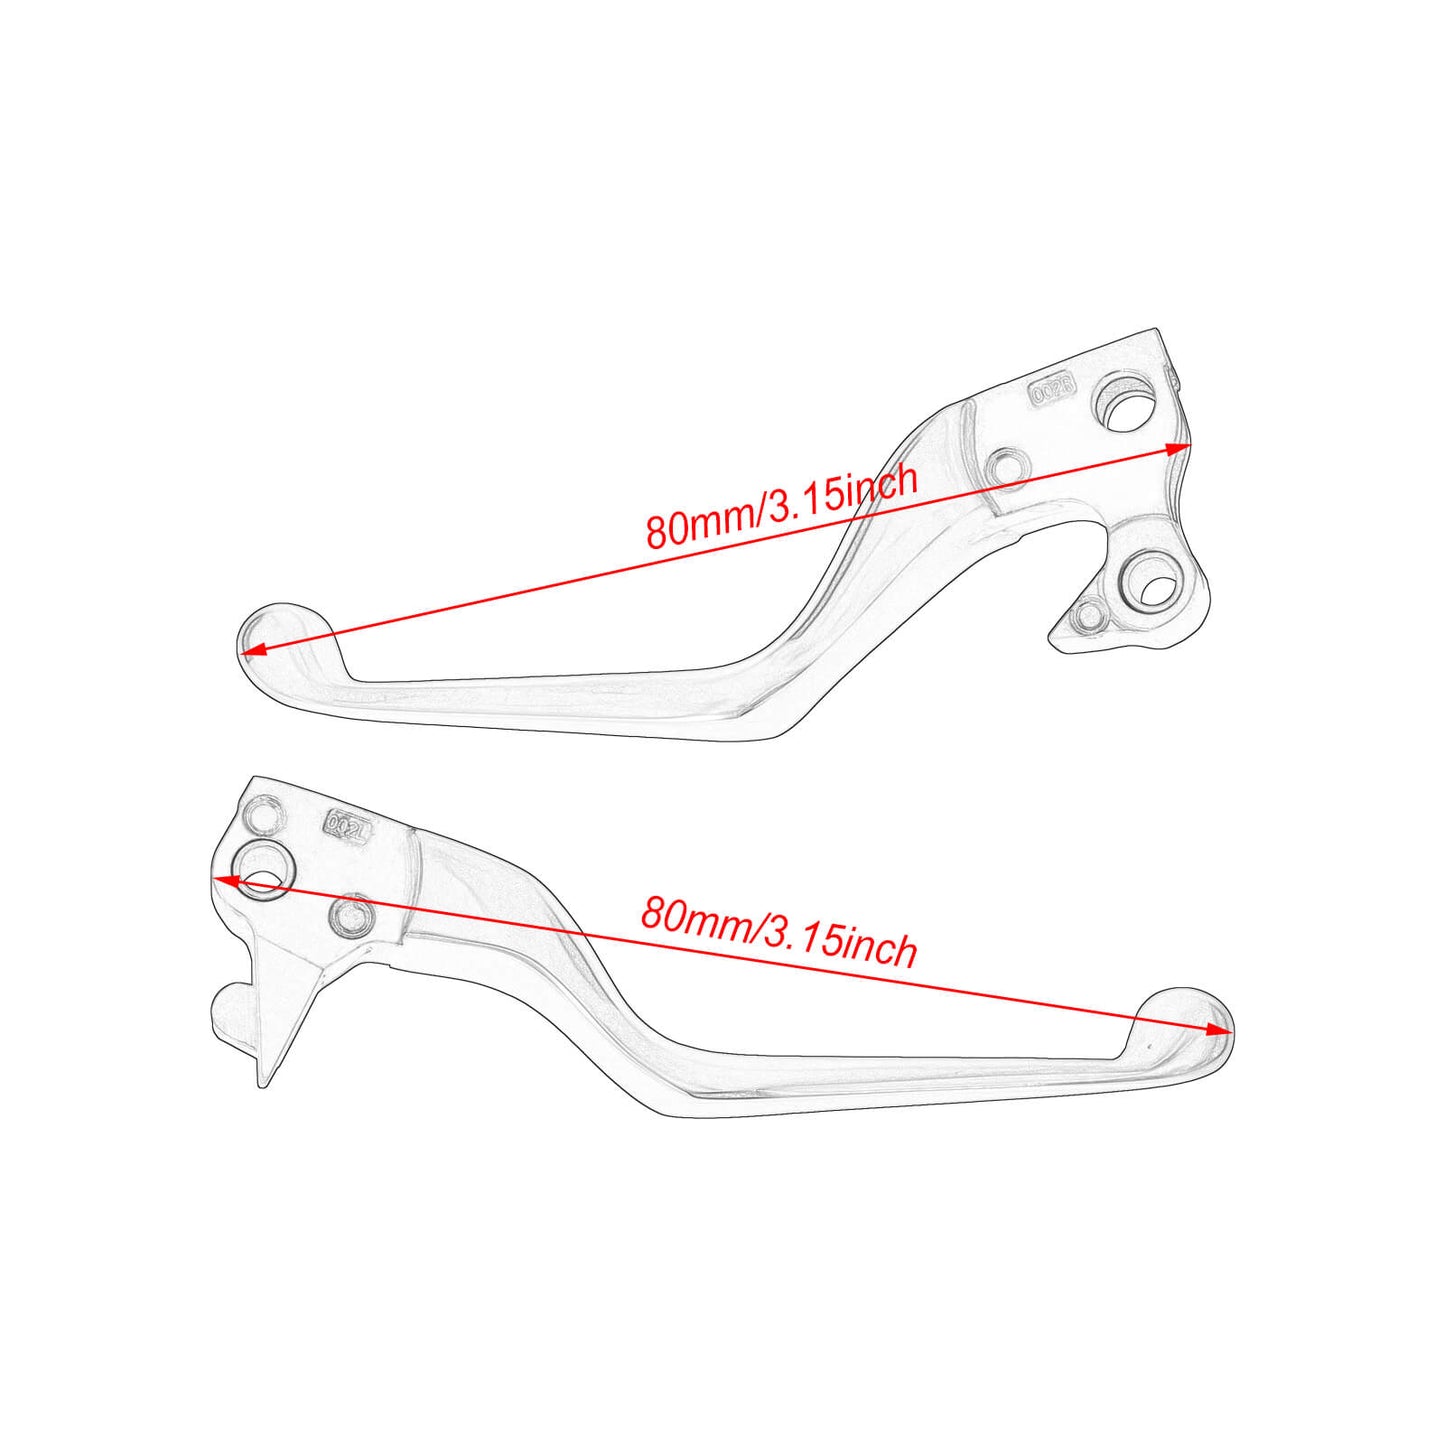 GP005904-mactions-harley-brake-clutch-lever-sportster-size